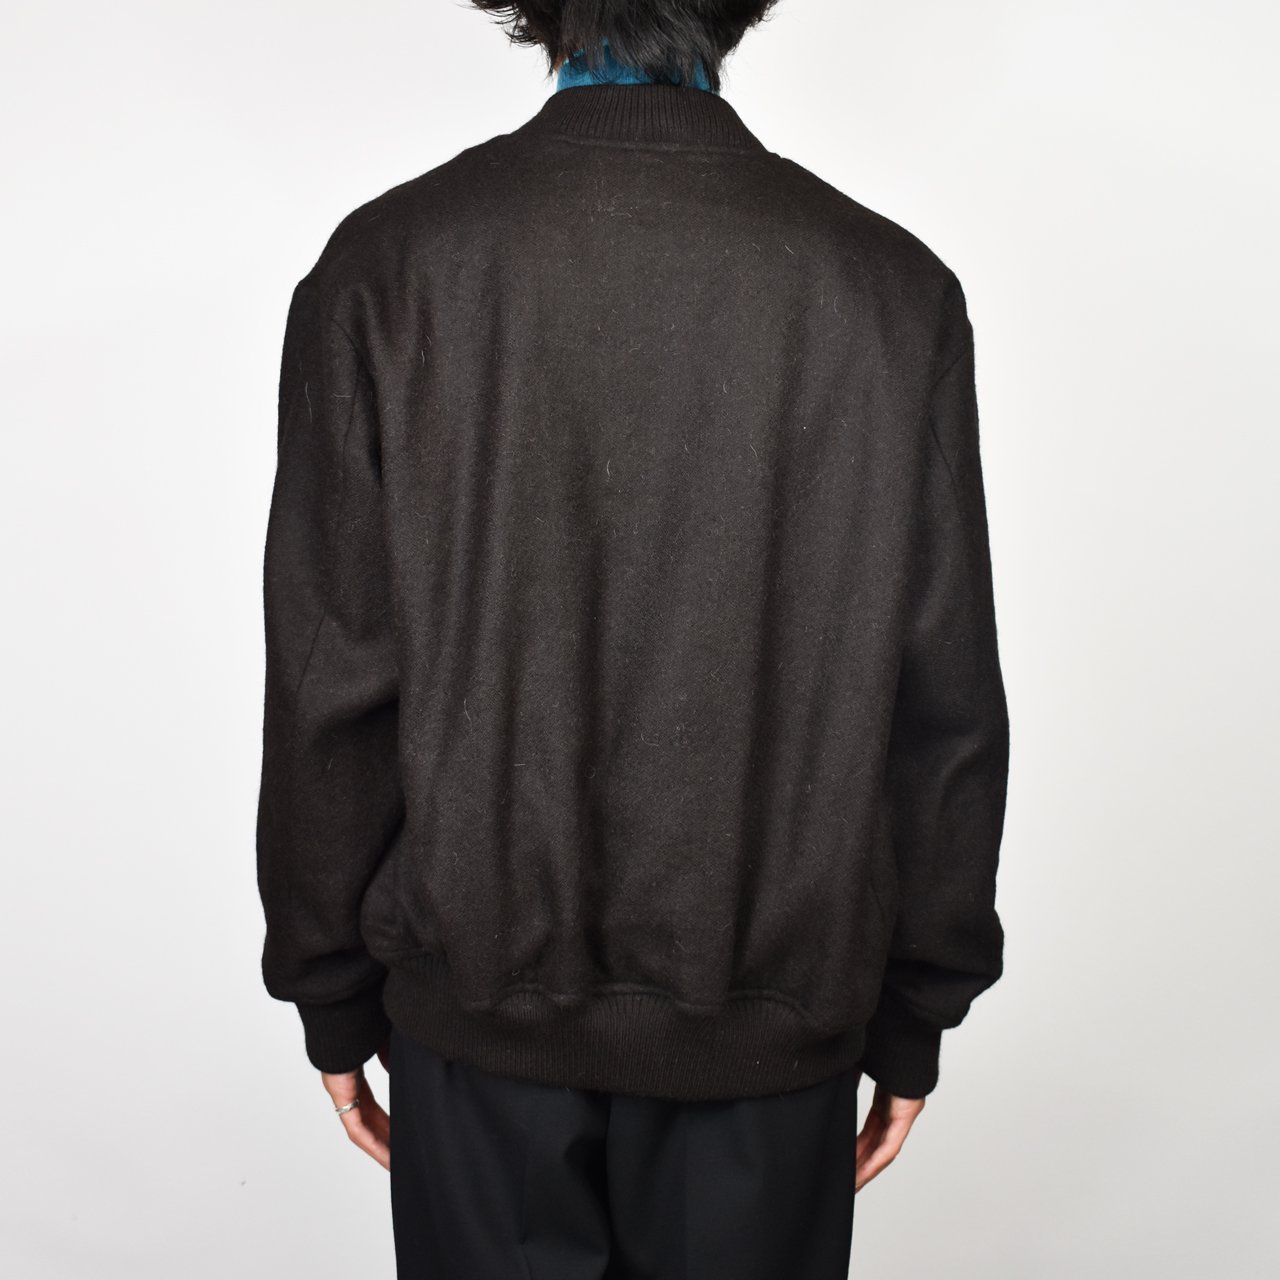 MARKAWARE (マーカウェア)23AW/秋冬
ALPACA SPORTS JACKET BLACK -NATURAL BLACK ALPACA DOUBLE CLOTH-
